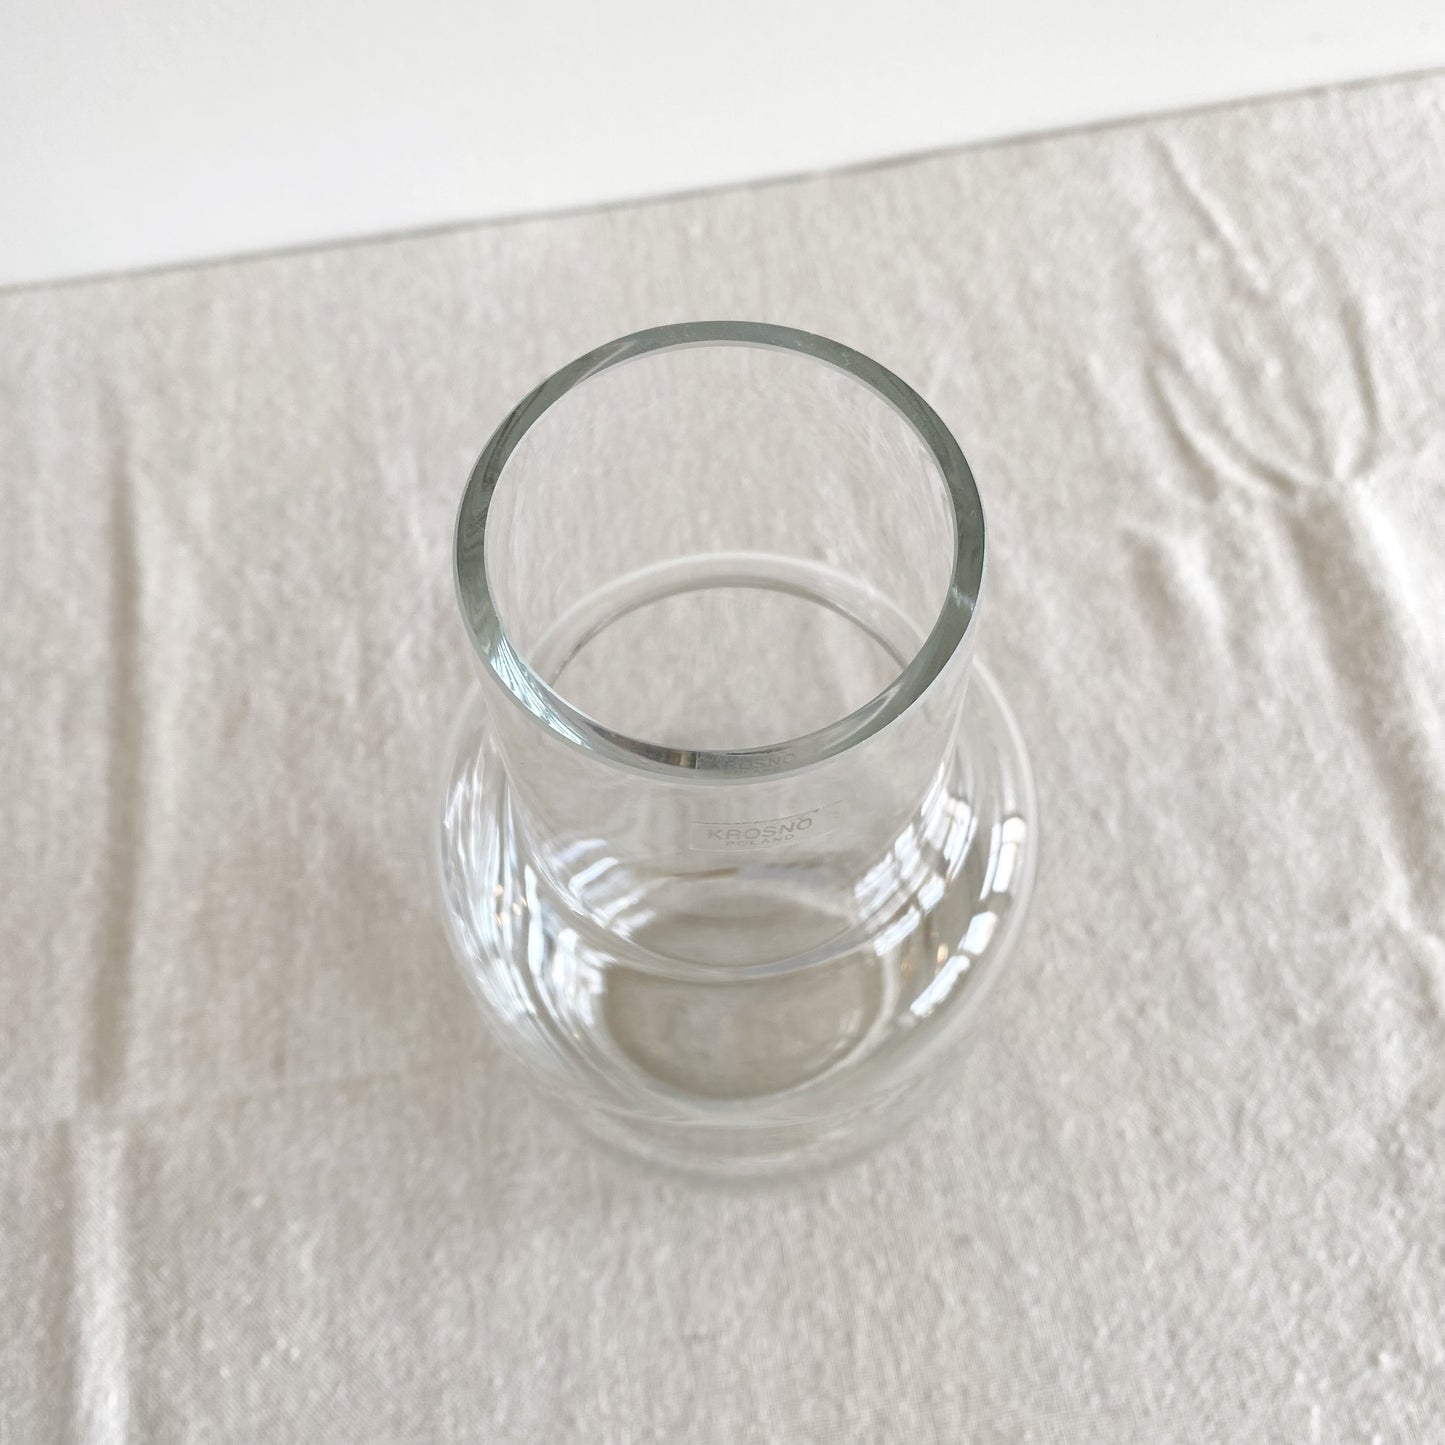 Minimalist Crystal Decanter / Vase, Krosno